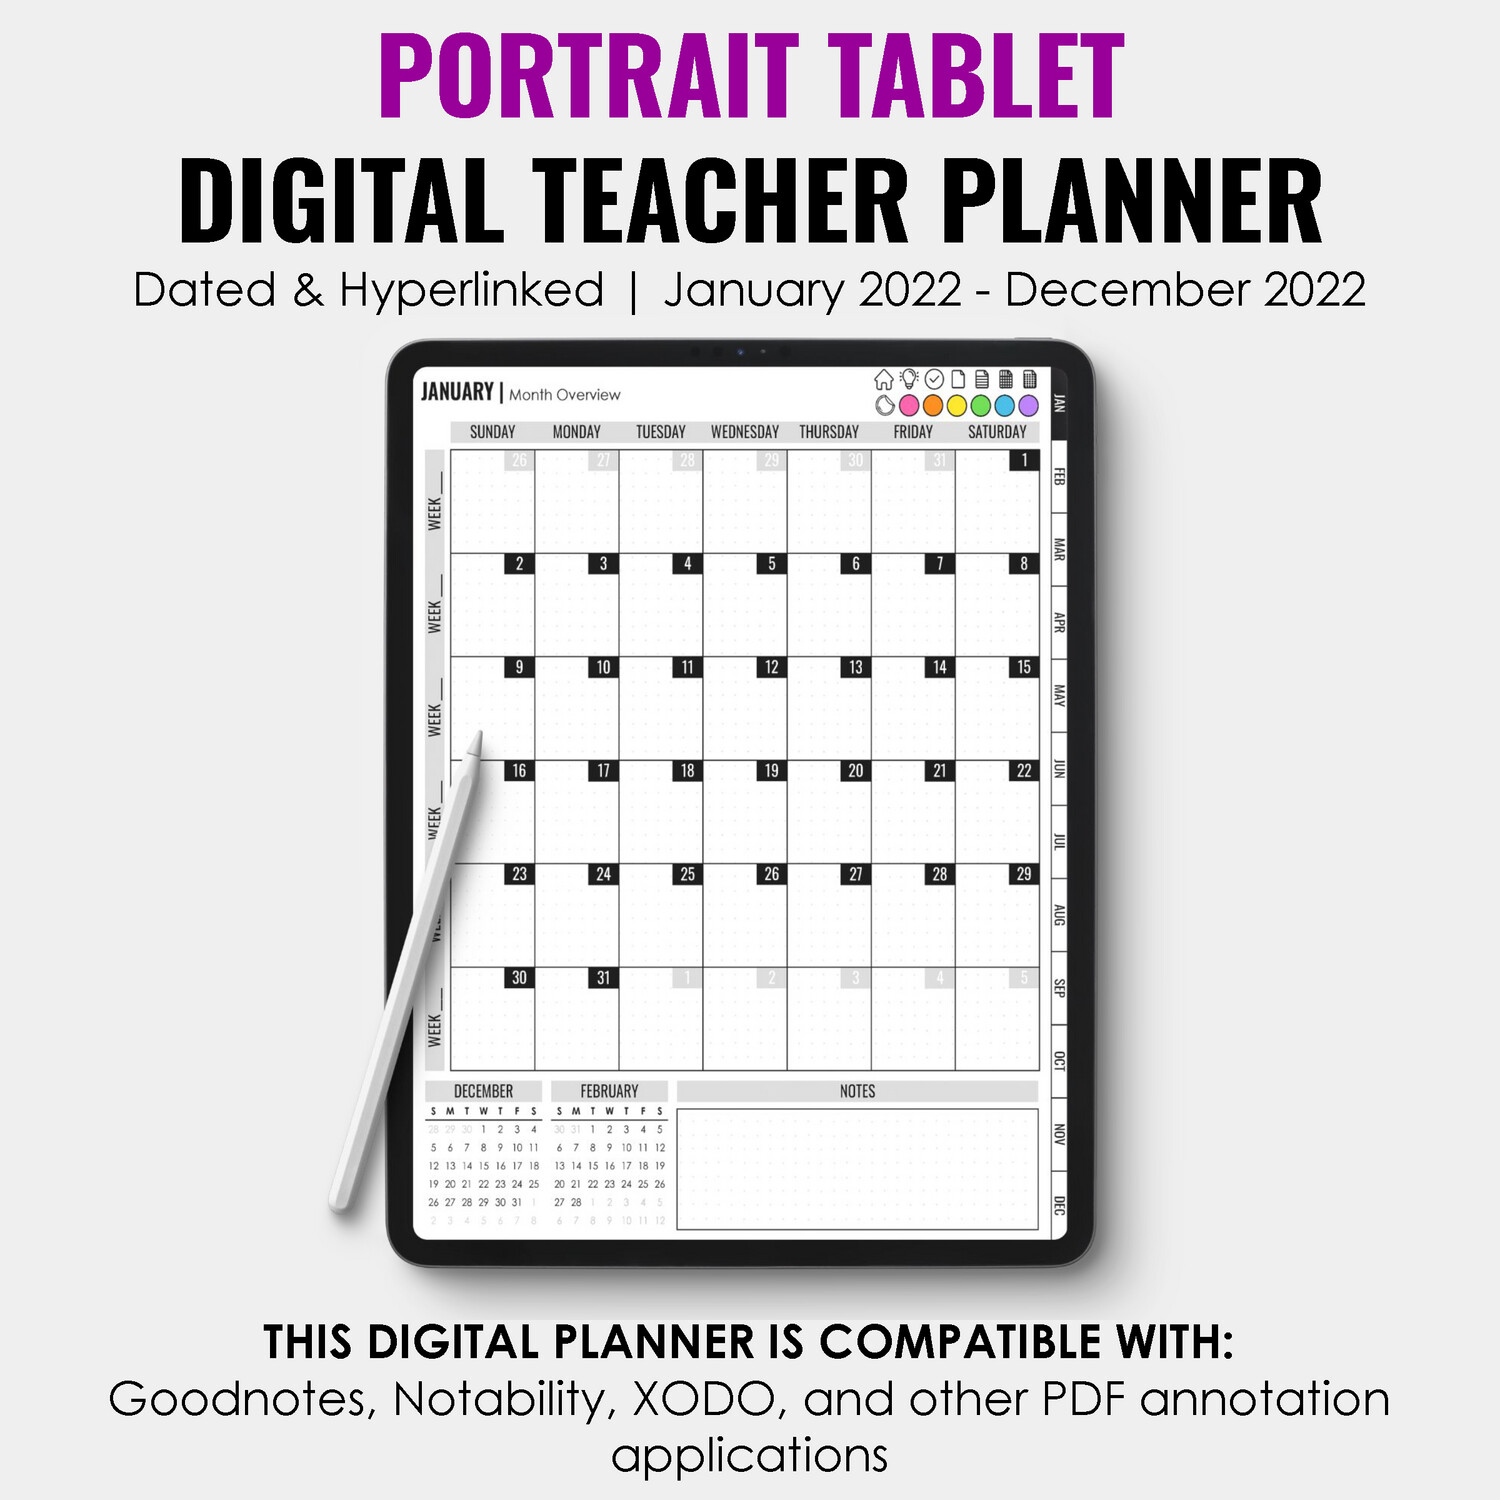 2022 Tablet Digital Teacher Planner | Portrait